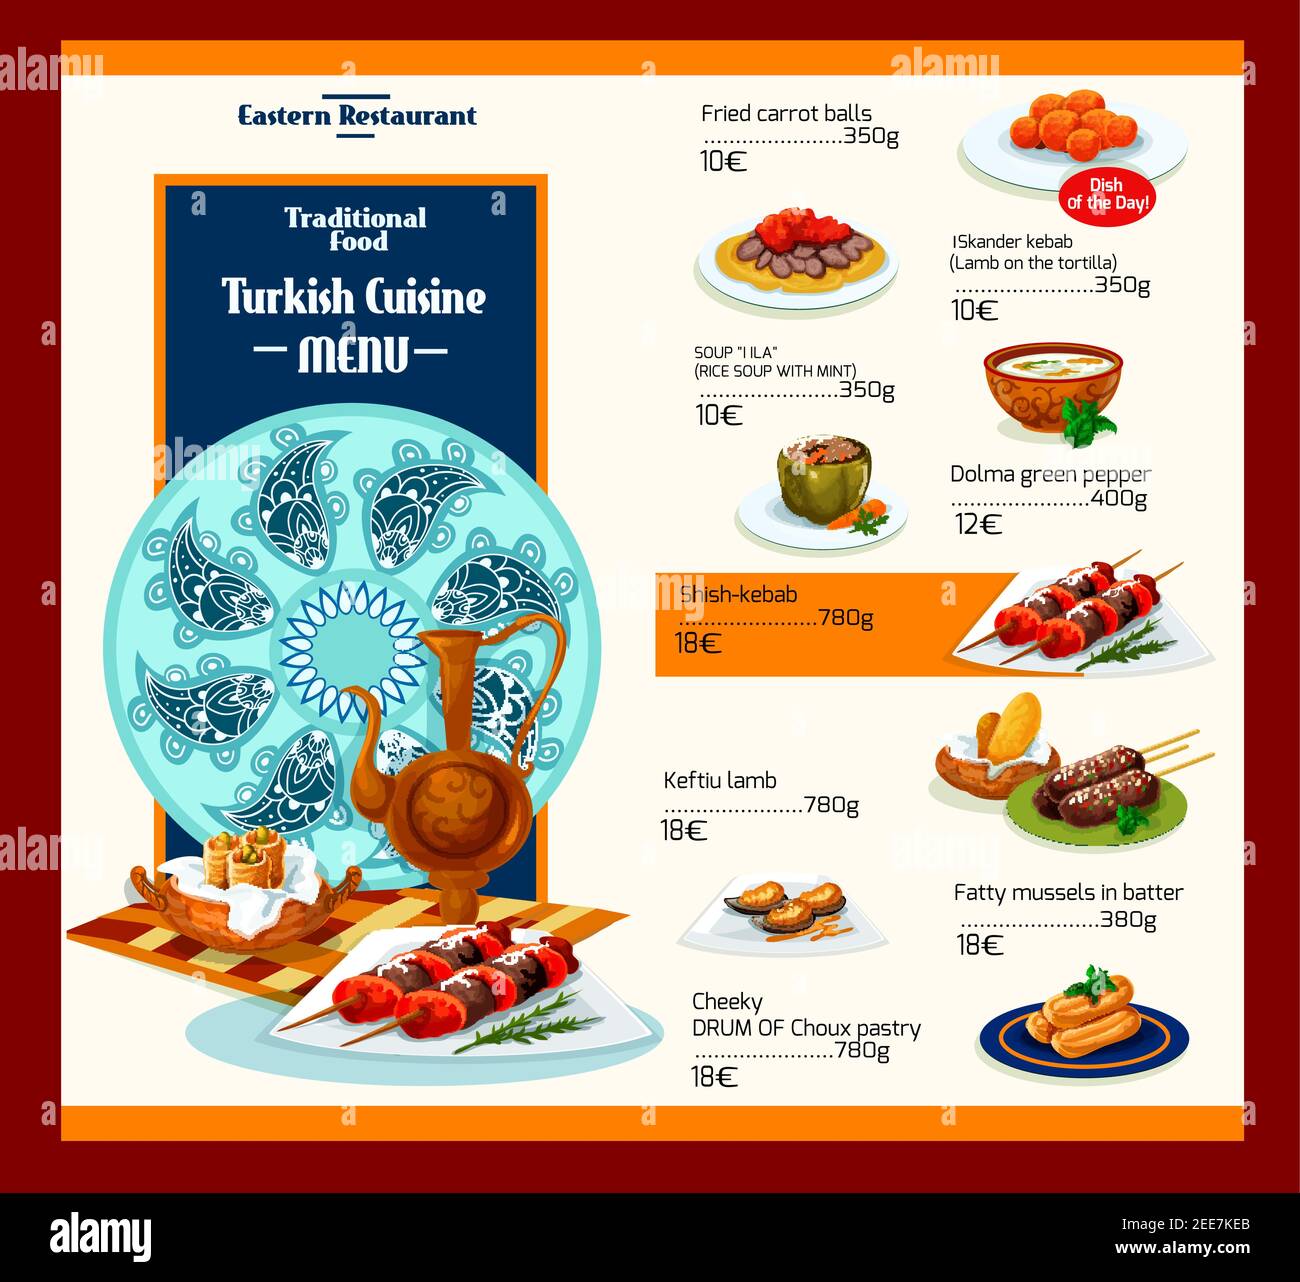 Турецкий ресторан меню. Турецкое меню. Меню турецкой кухни. Дизайн меню для турецкого ресторана. Турецкая кухня ресторанное меню.